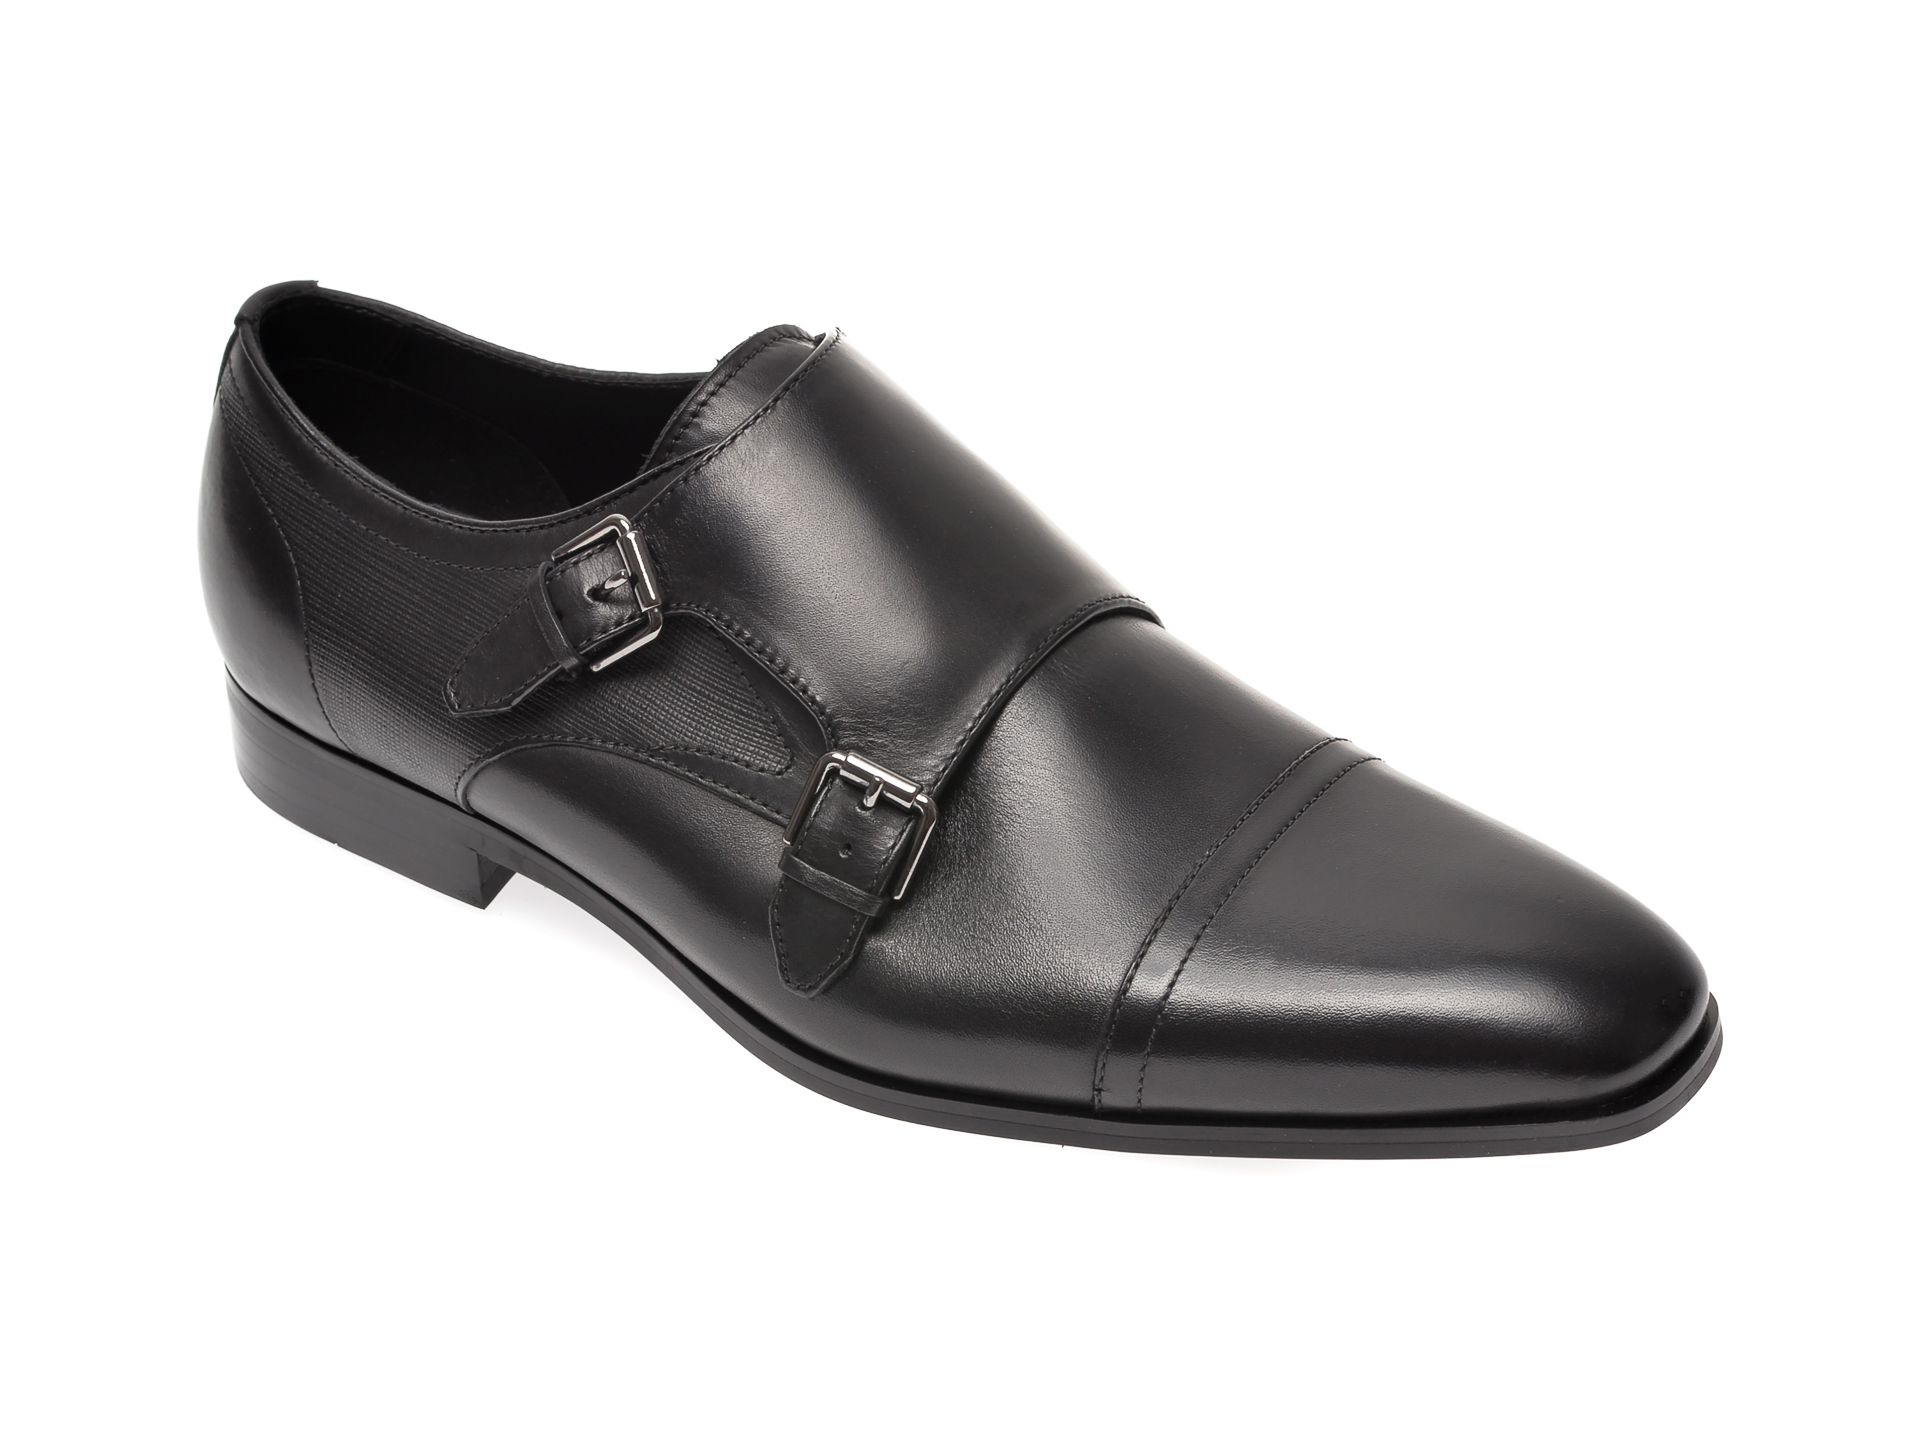 Pantofi ALDO negri, Hoeswen001, din piele naturala imagine otter.ro 2021